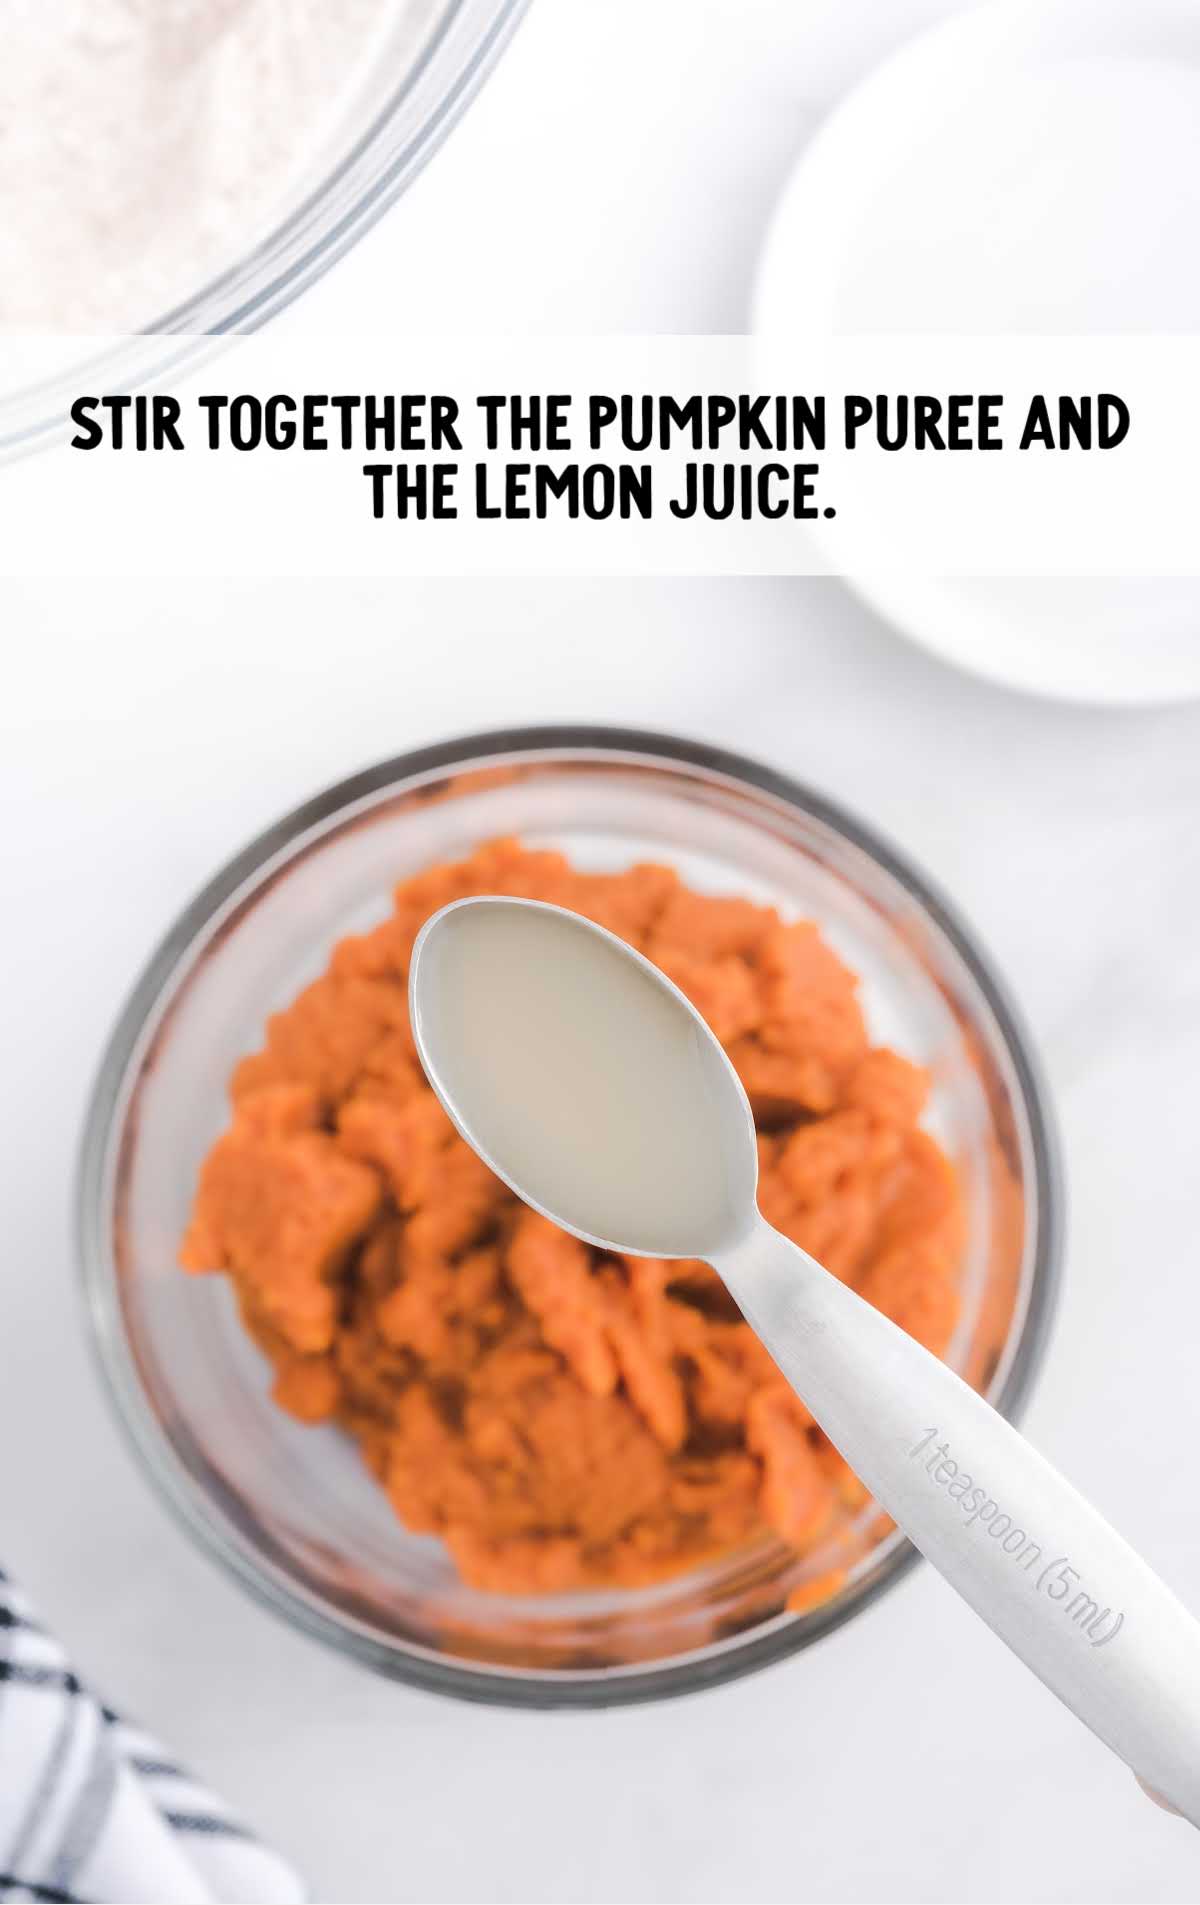 Pumpkin Roll process shot of lemon juice being added to a bowl of pumpkin puree